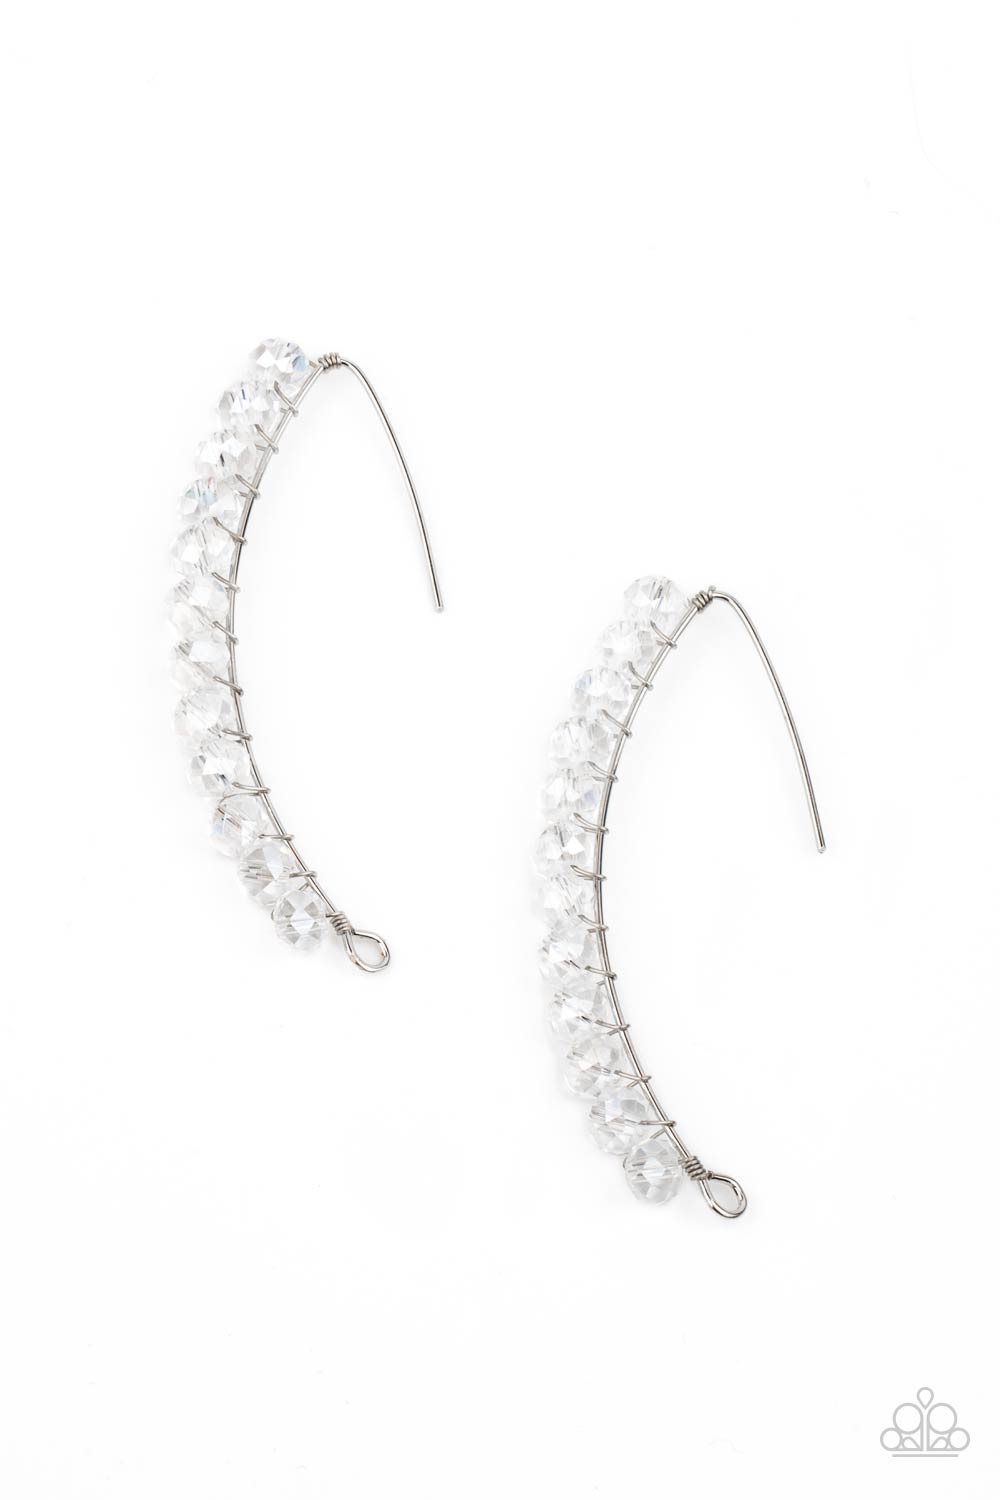 GLOW Hanging Fruit - White Earrings - Princess Glam Shop